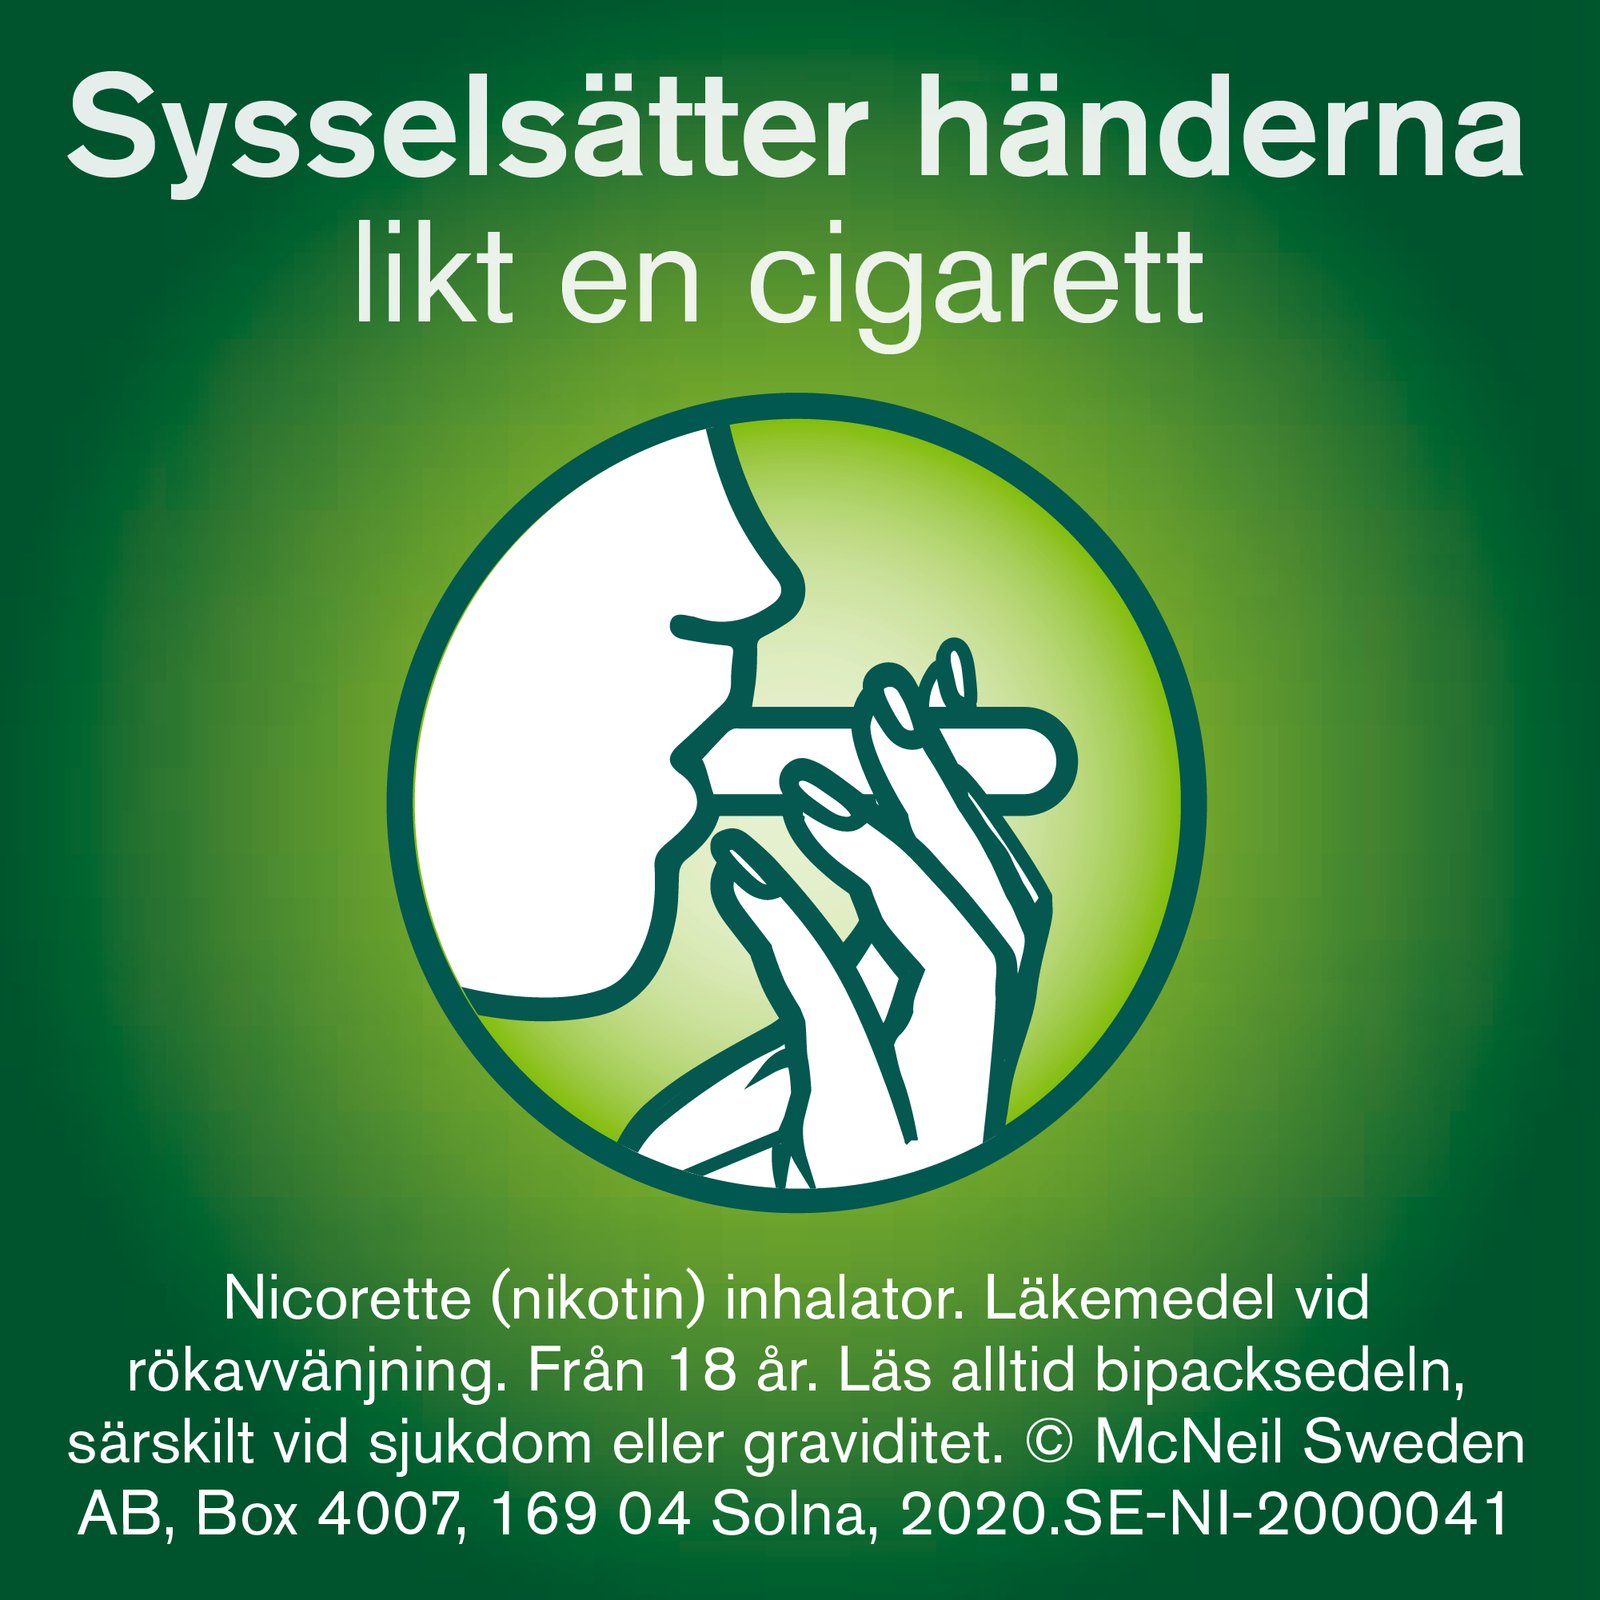 Nicorette Inhalator Inhalationsånga Vätska 10 mg 42 st